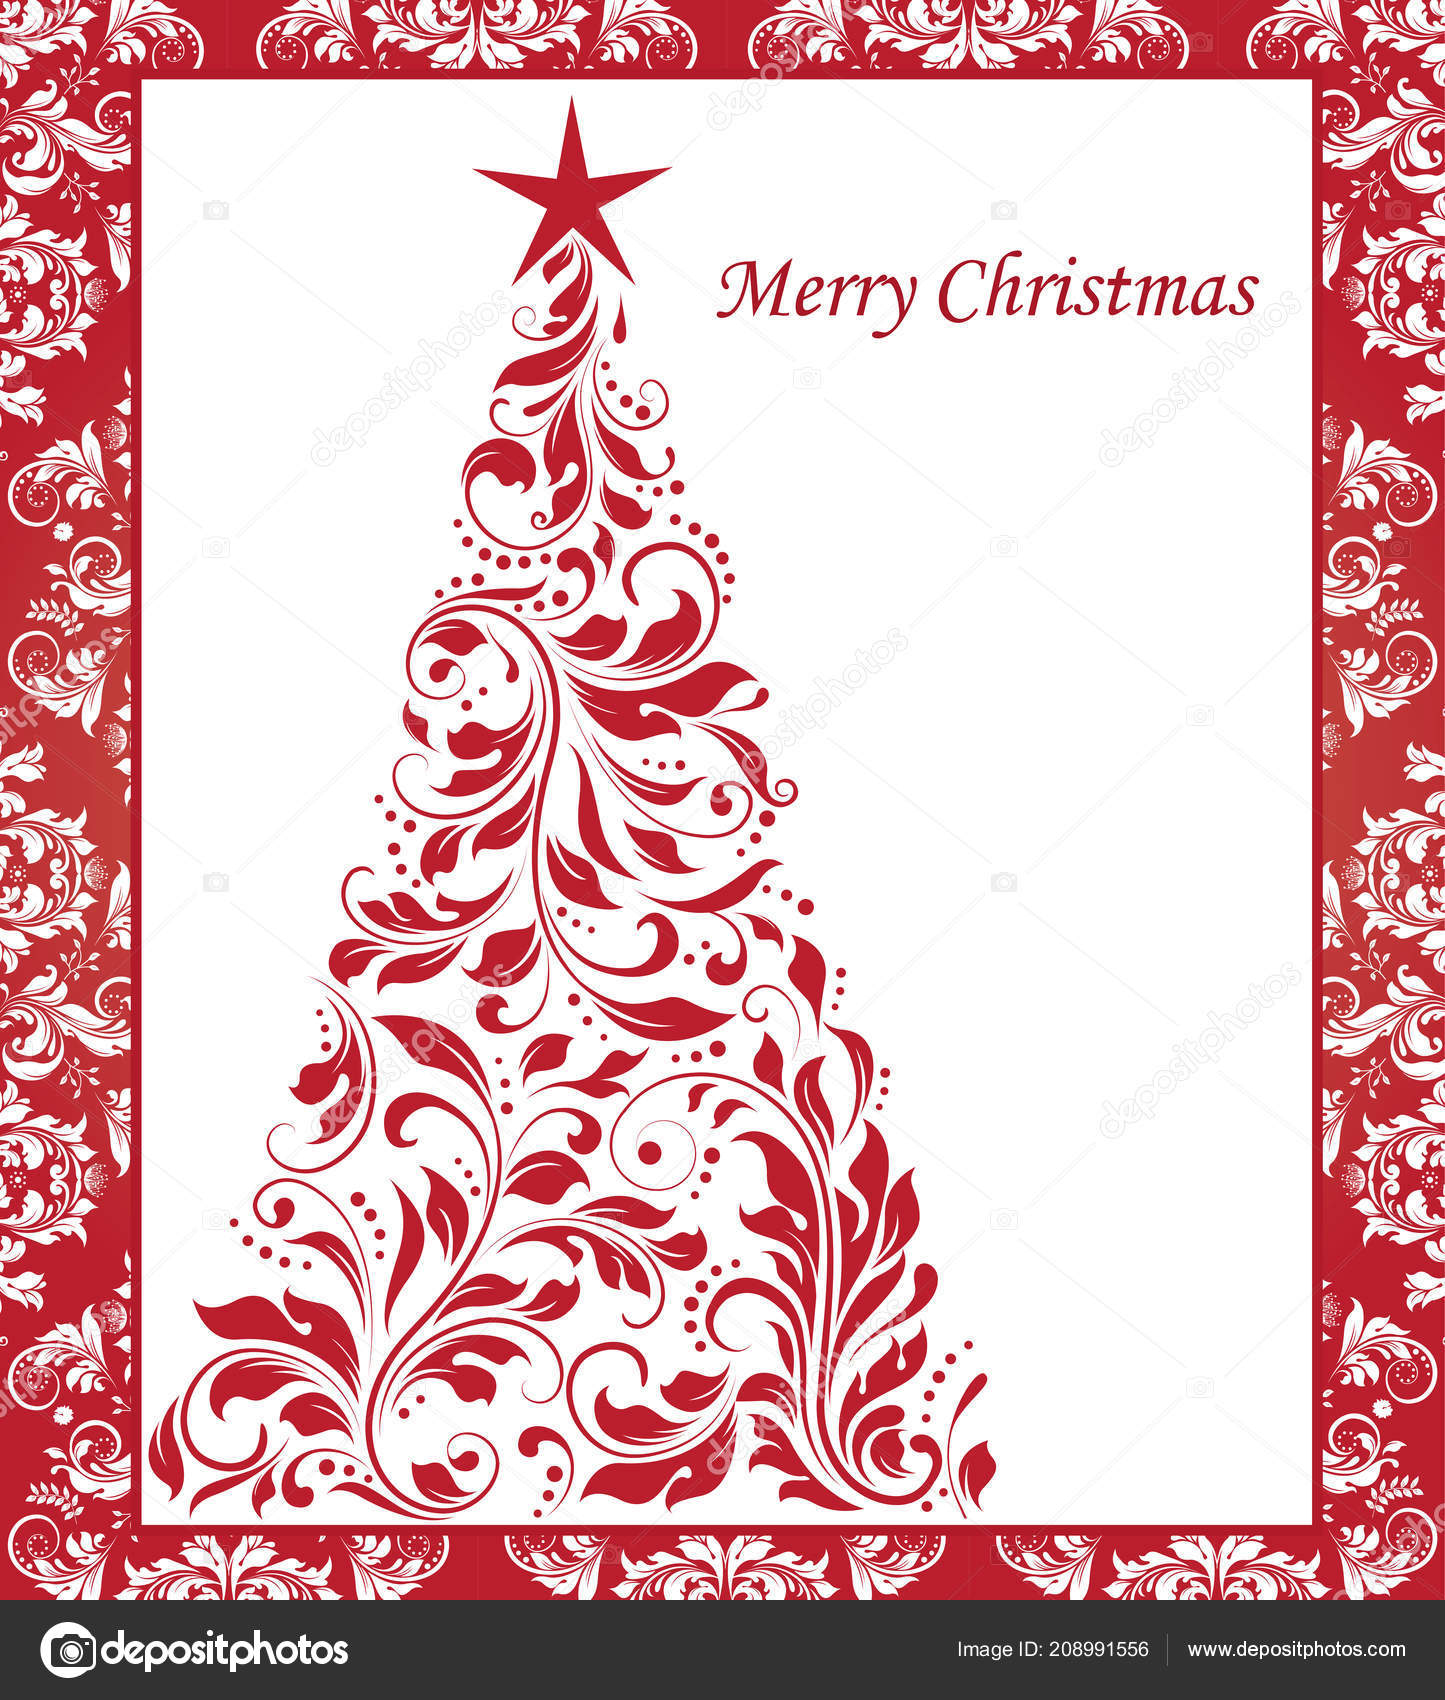 Vintage Christmas Card Ornate Elegant Abstract Floral Design Red White Stock Vector C Morphart 208991556